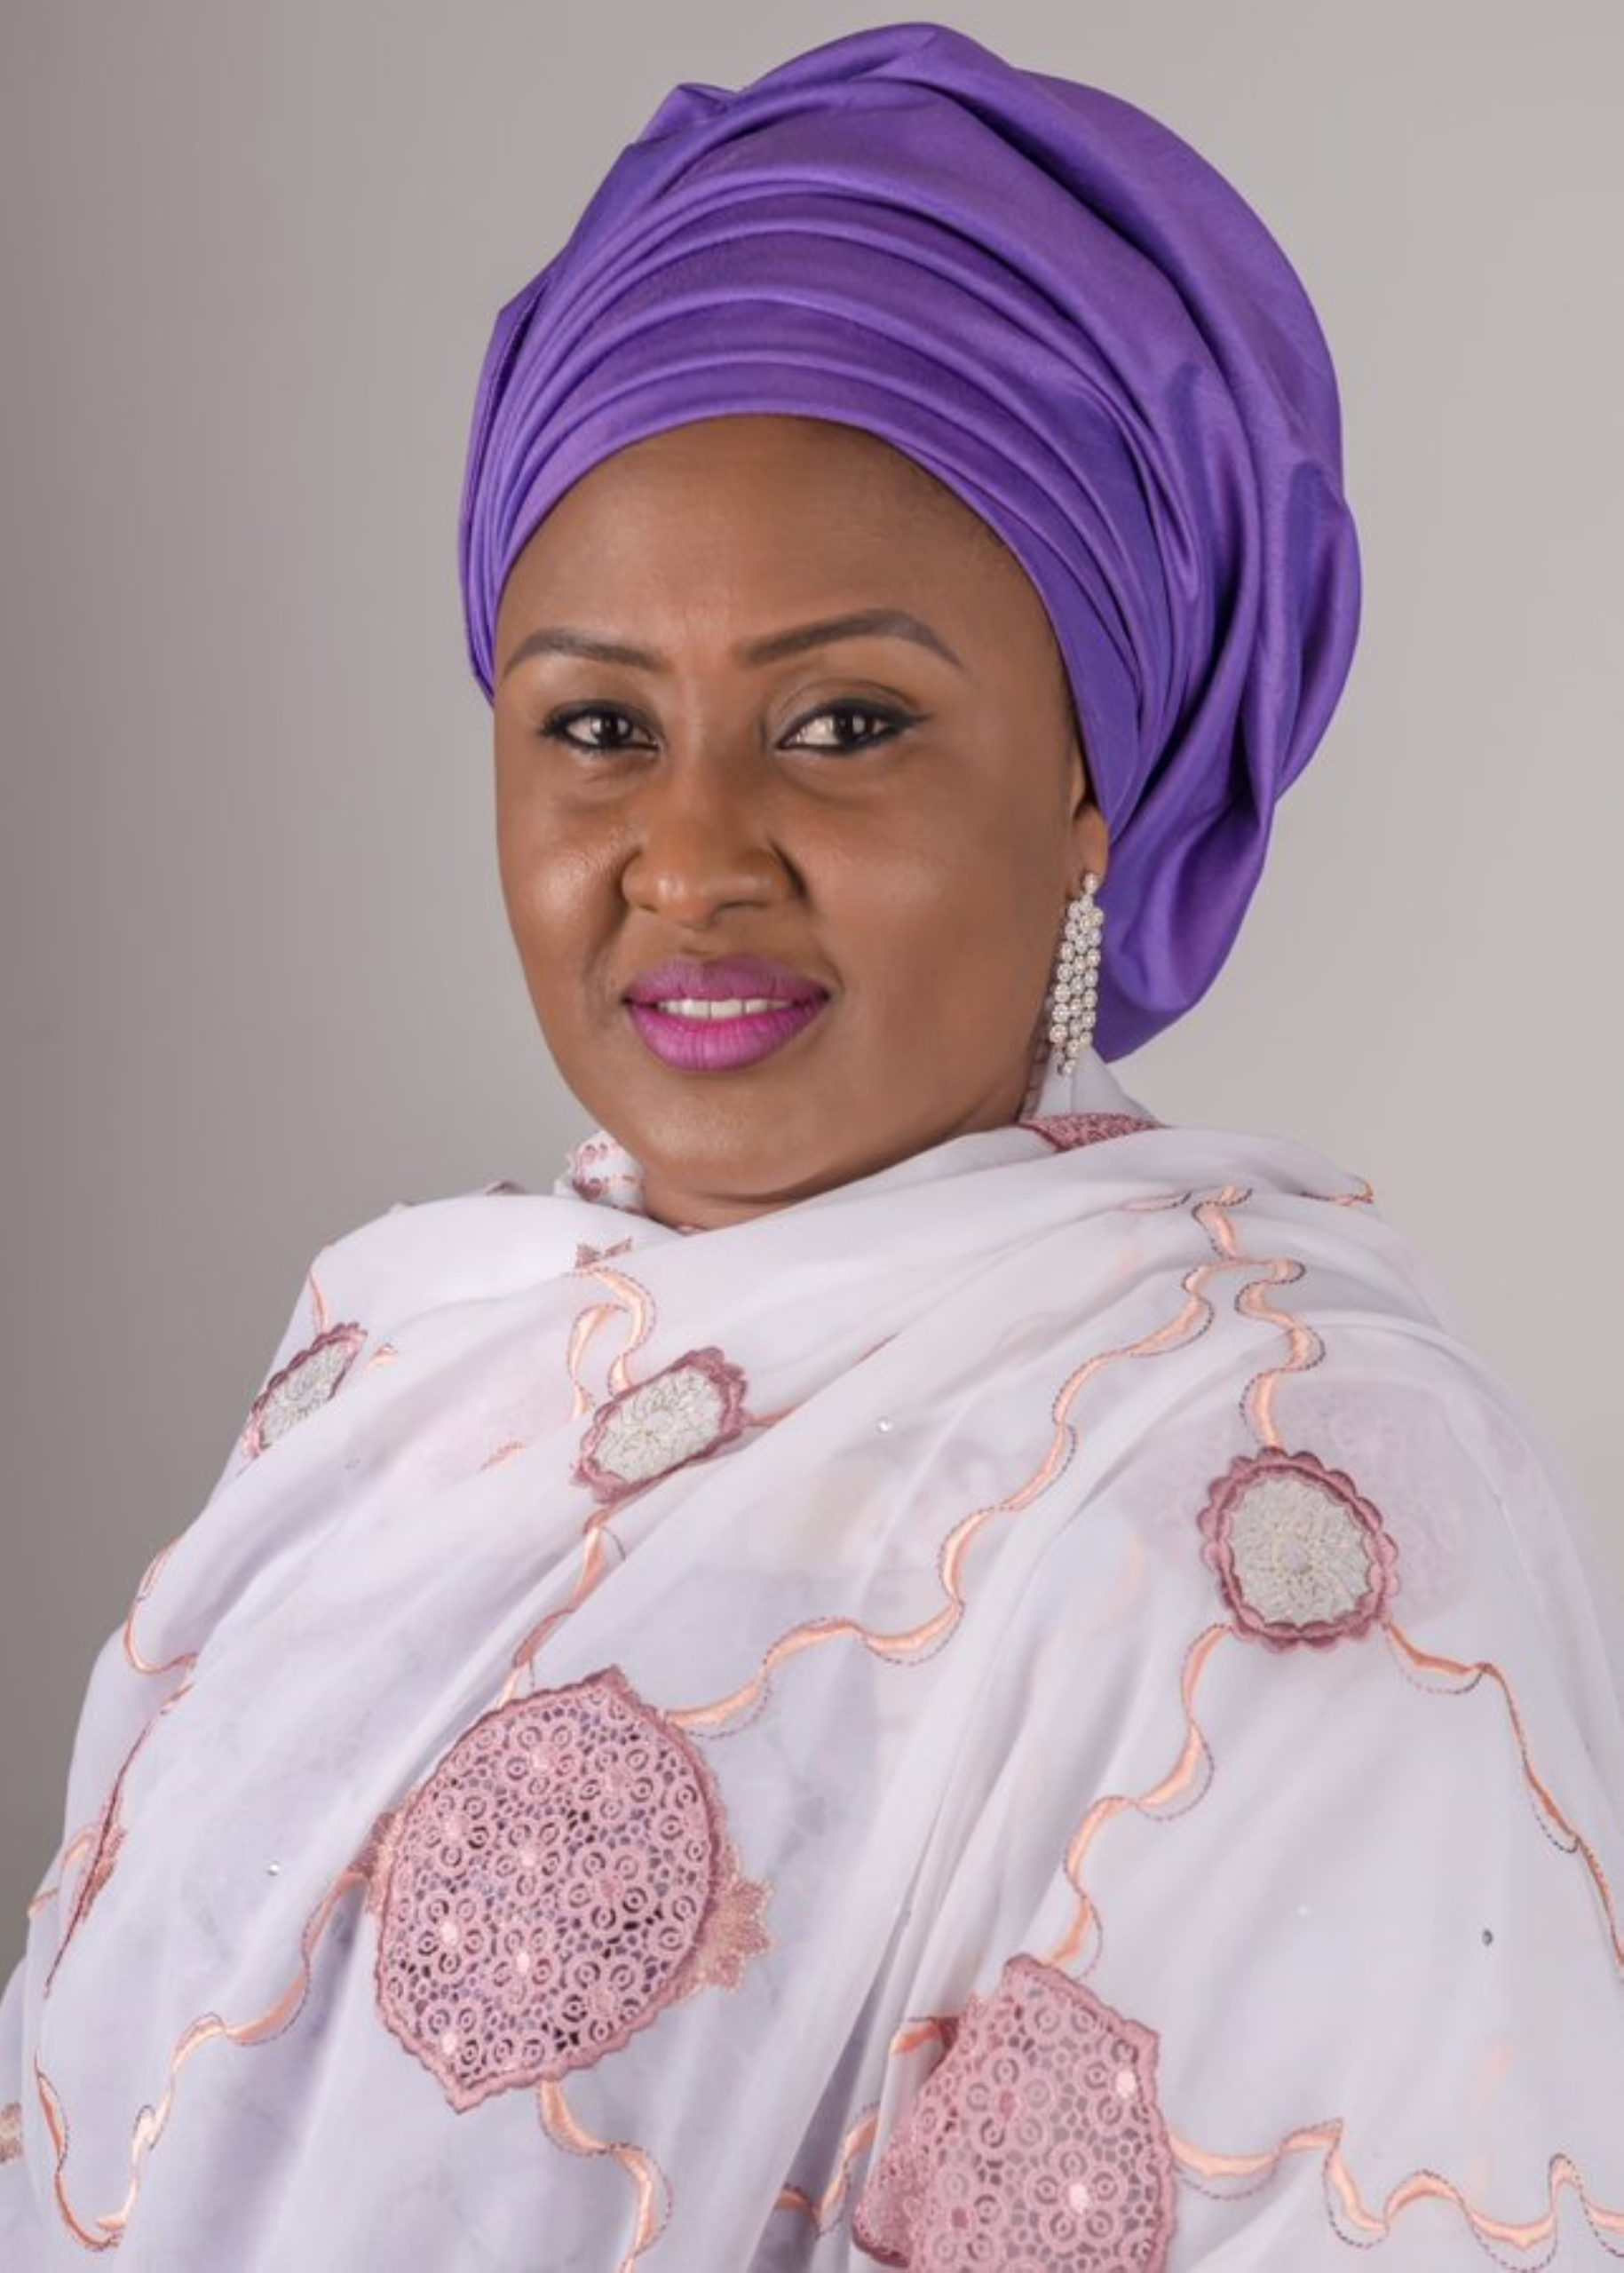 Nigerians React As Aisha Buhari Promotes Usage Of Traditional Medicine